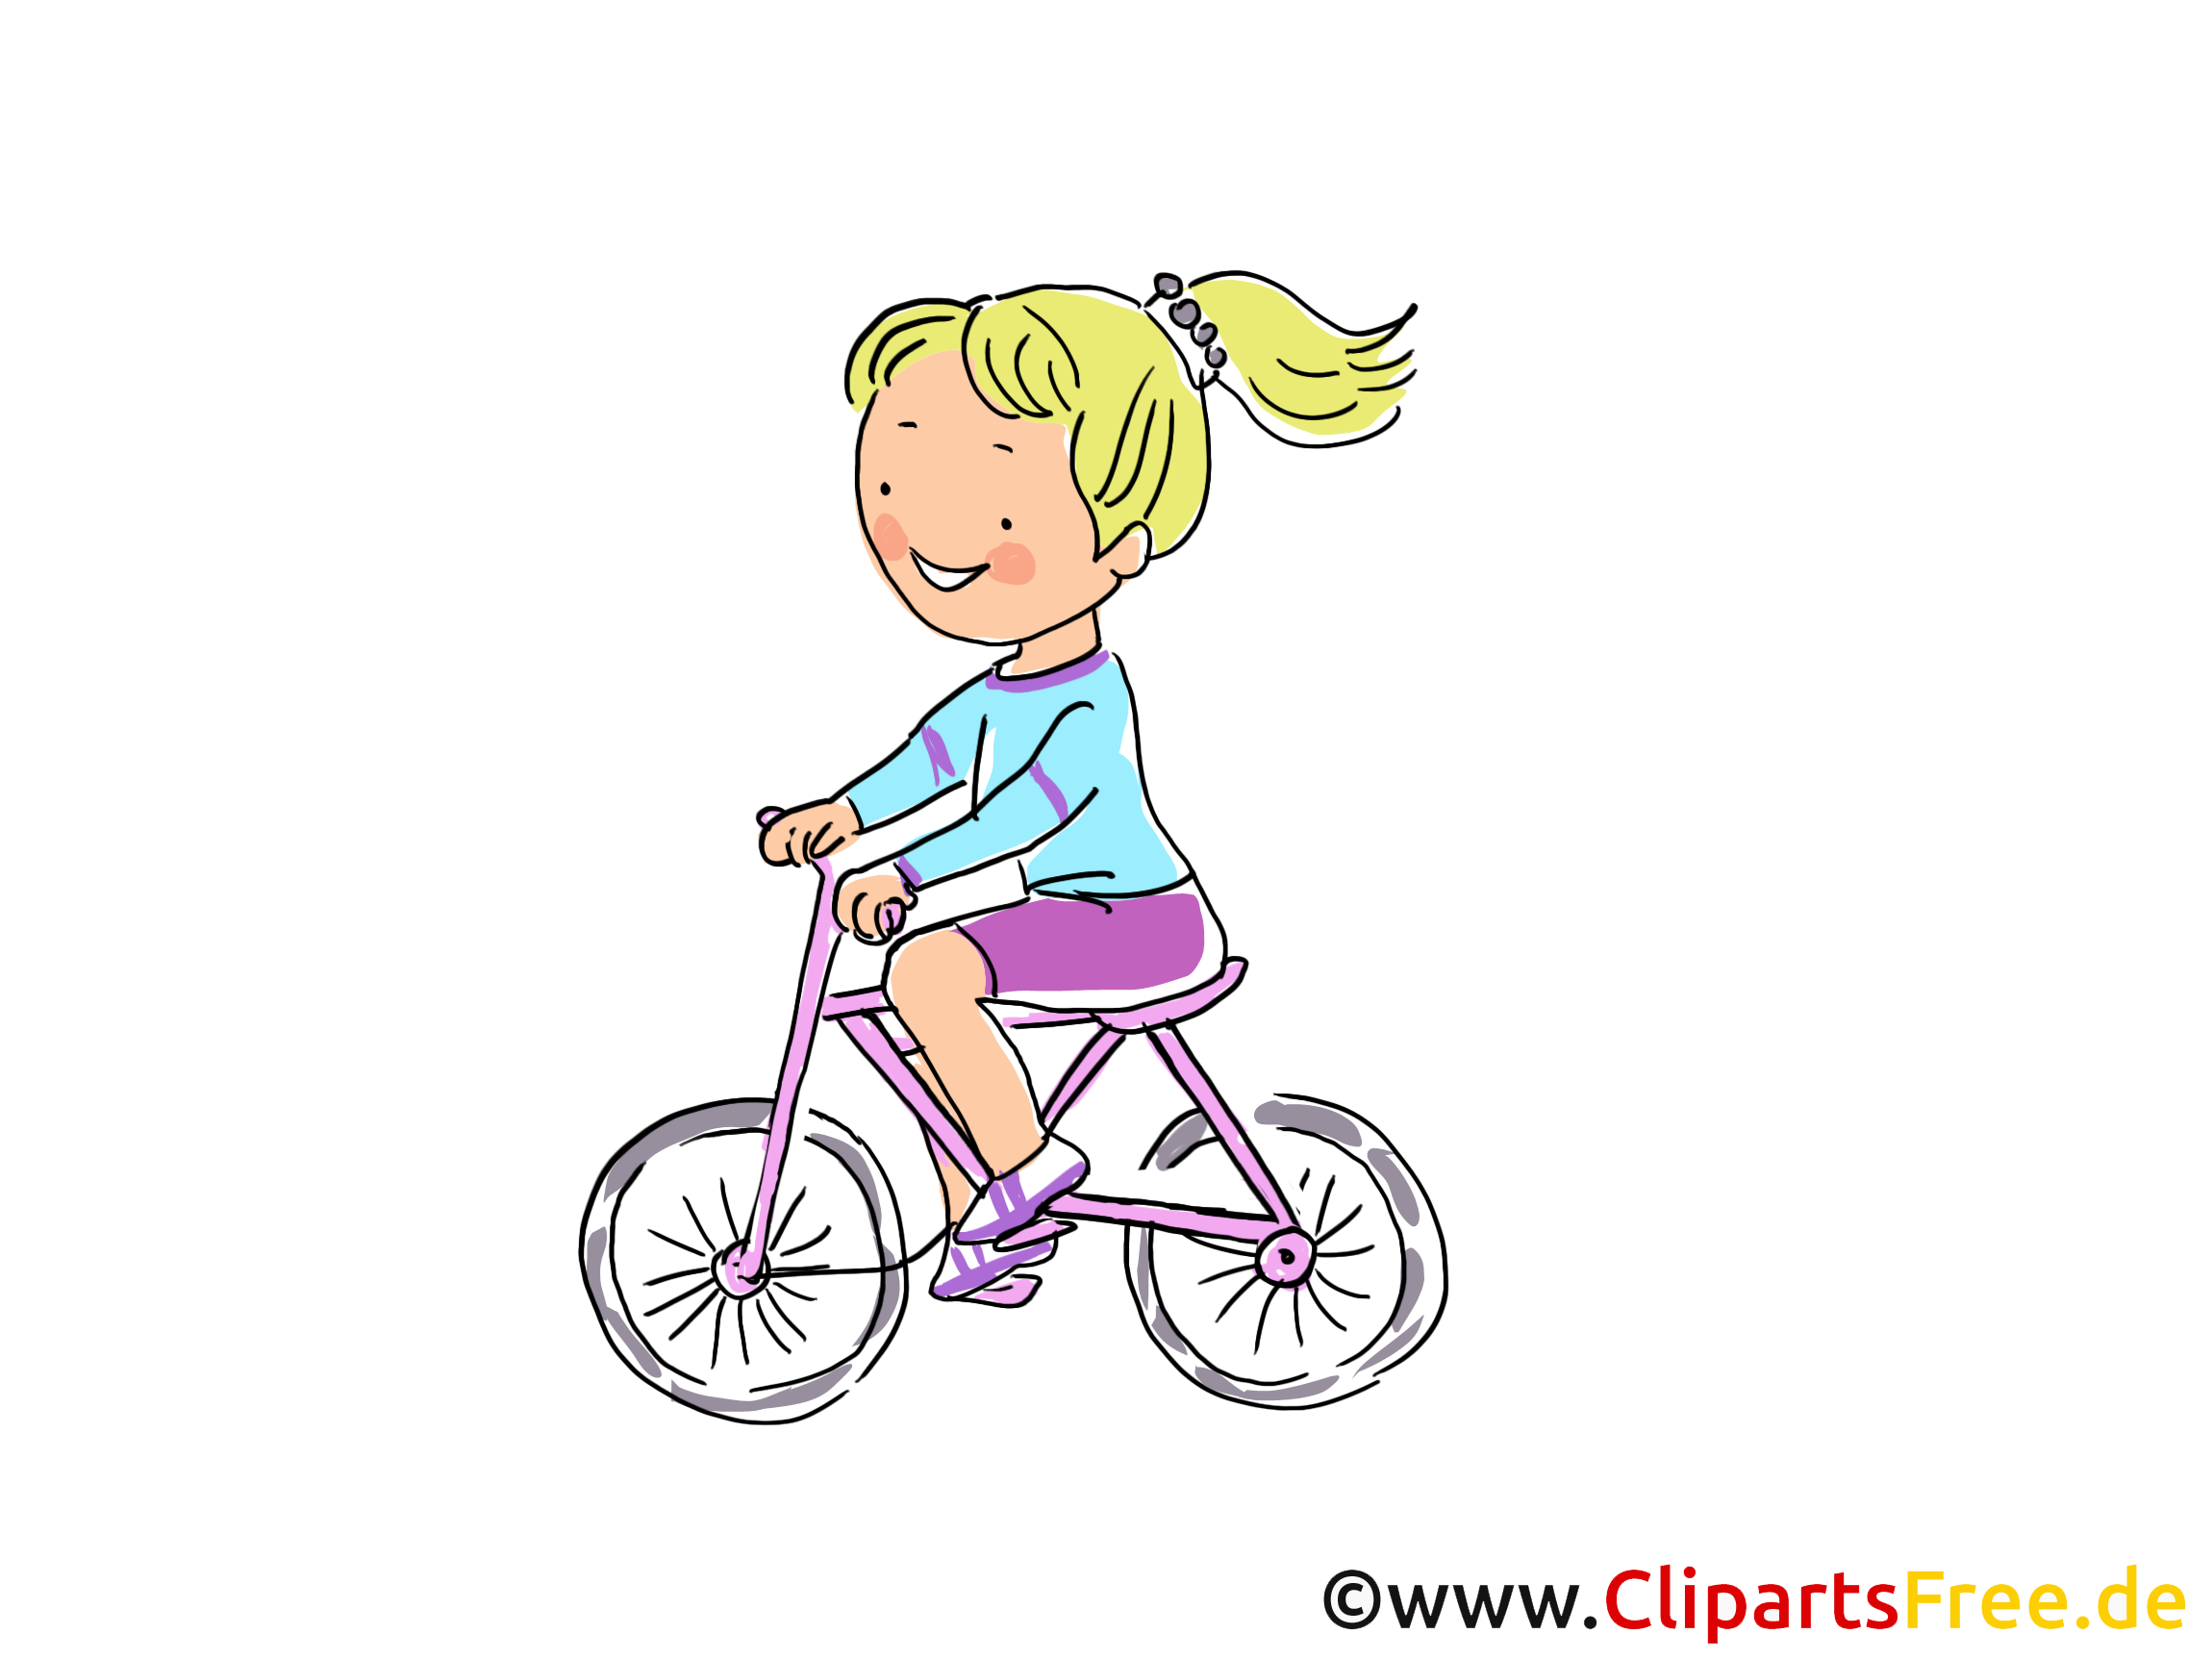 Fahrrad fahren Bild, Sport Cliparts, Comic, Cartoon, Image